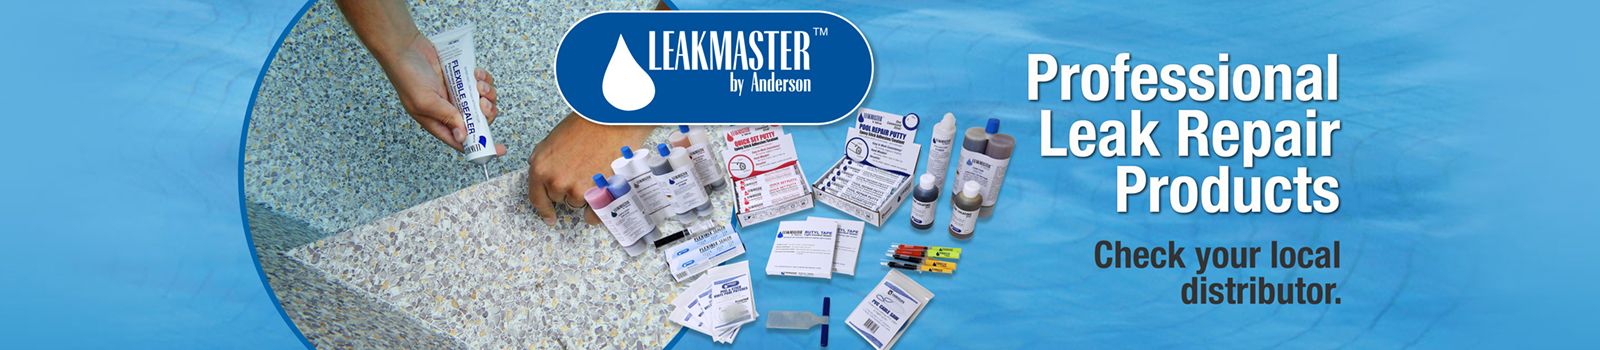 Professional Leak Repair Products